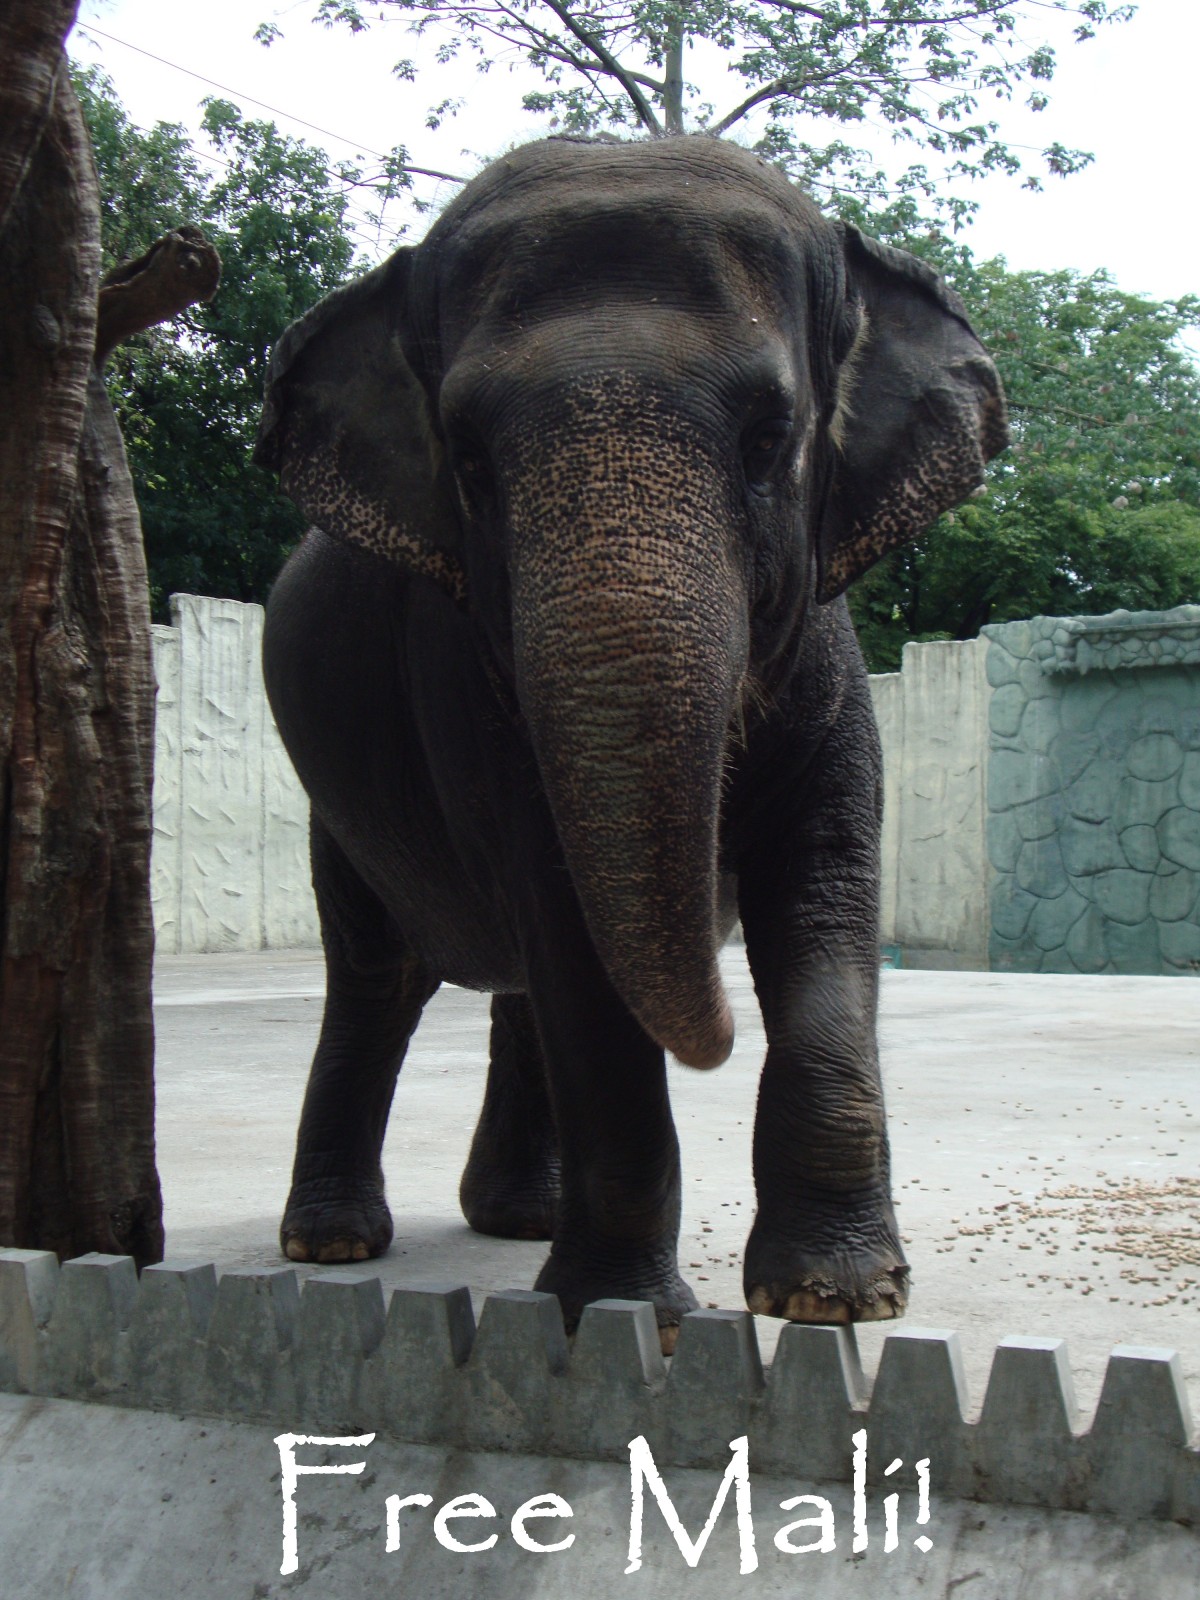 URGENT! Help Save Lonely, Bored, Miserable Elephant